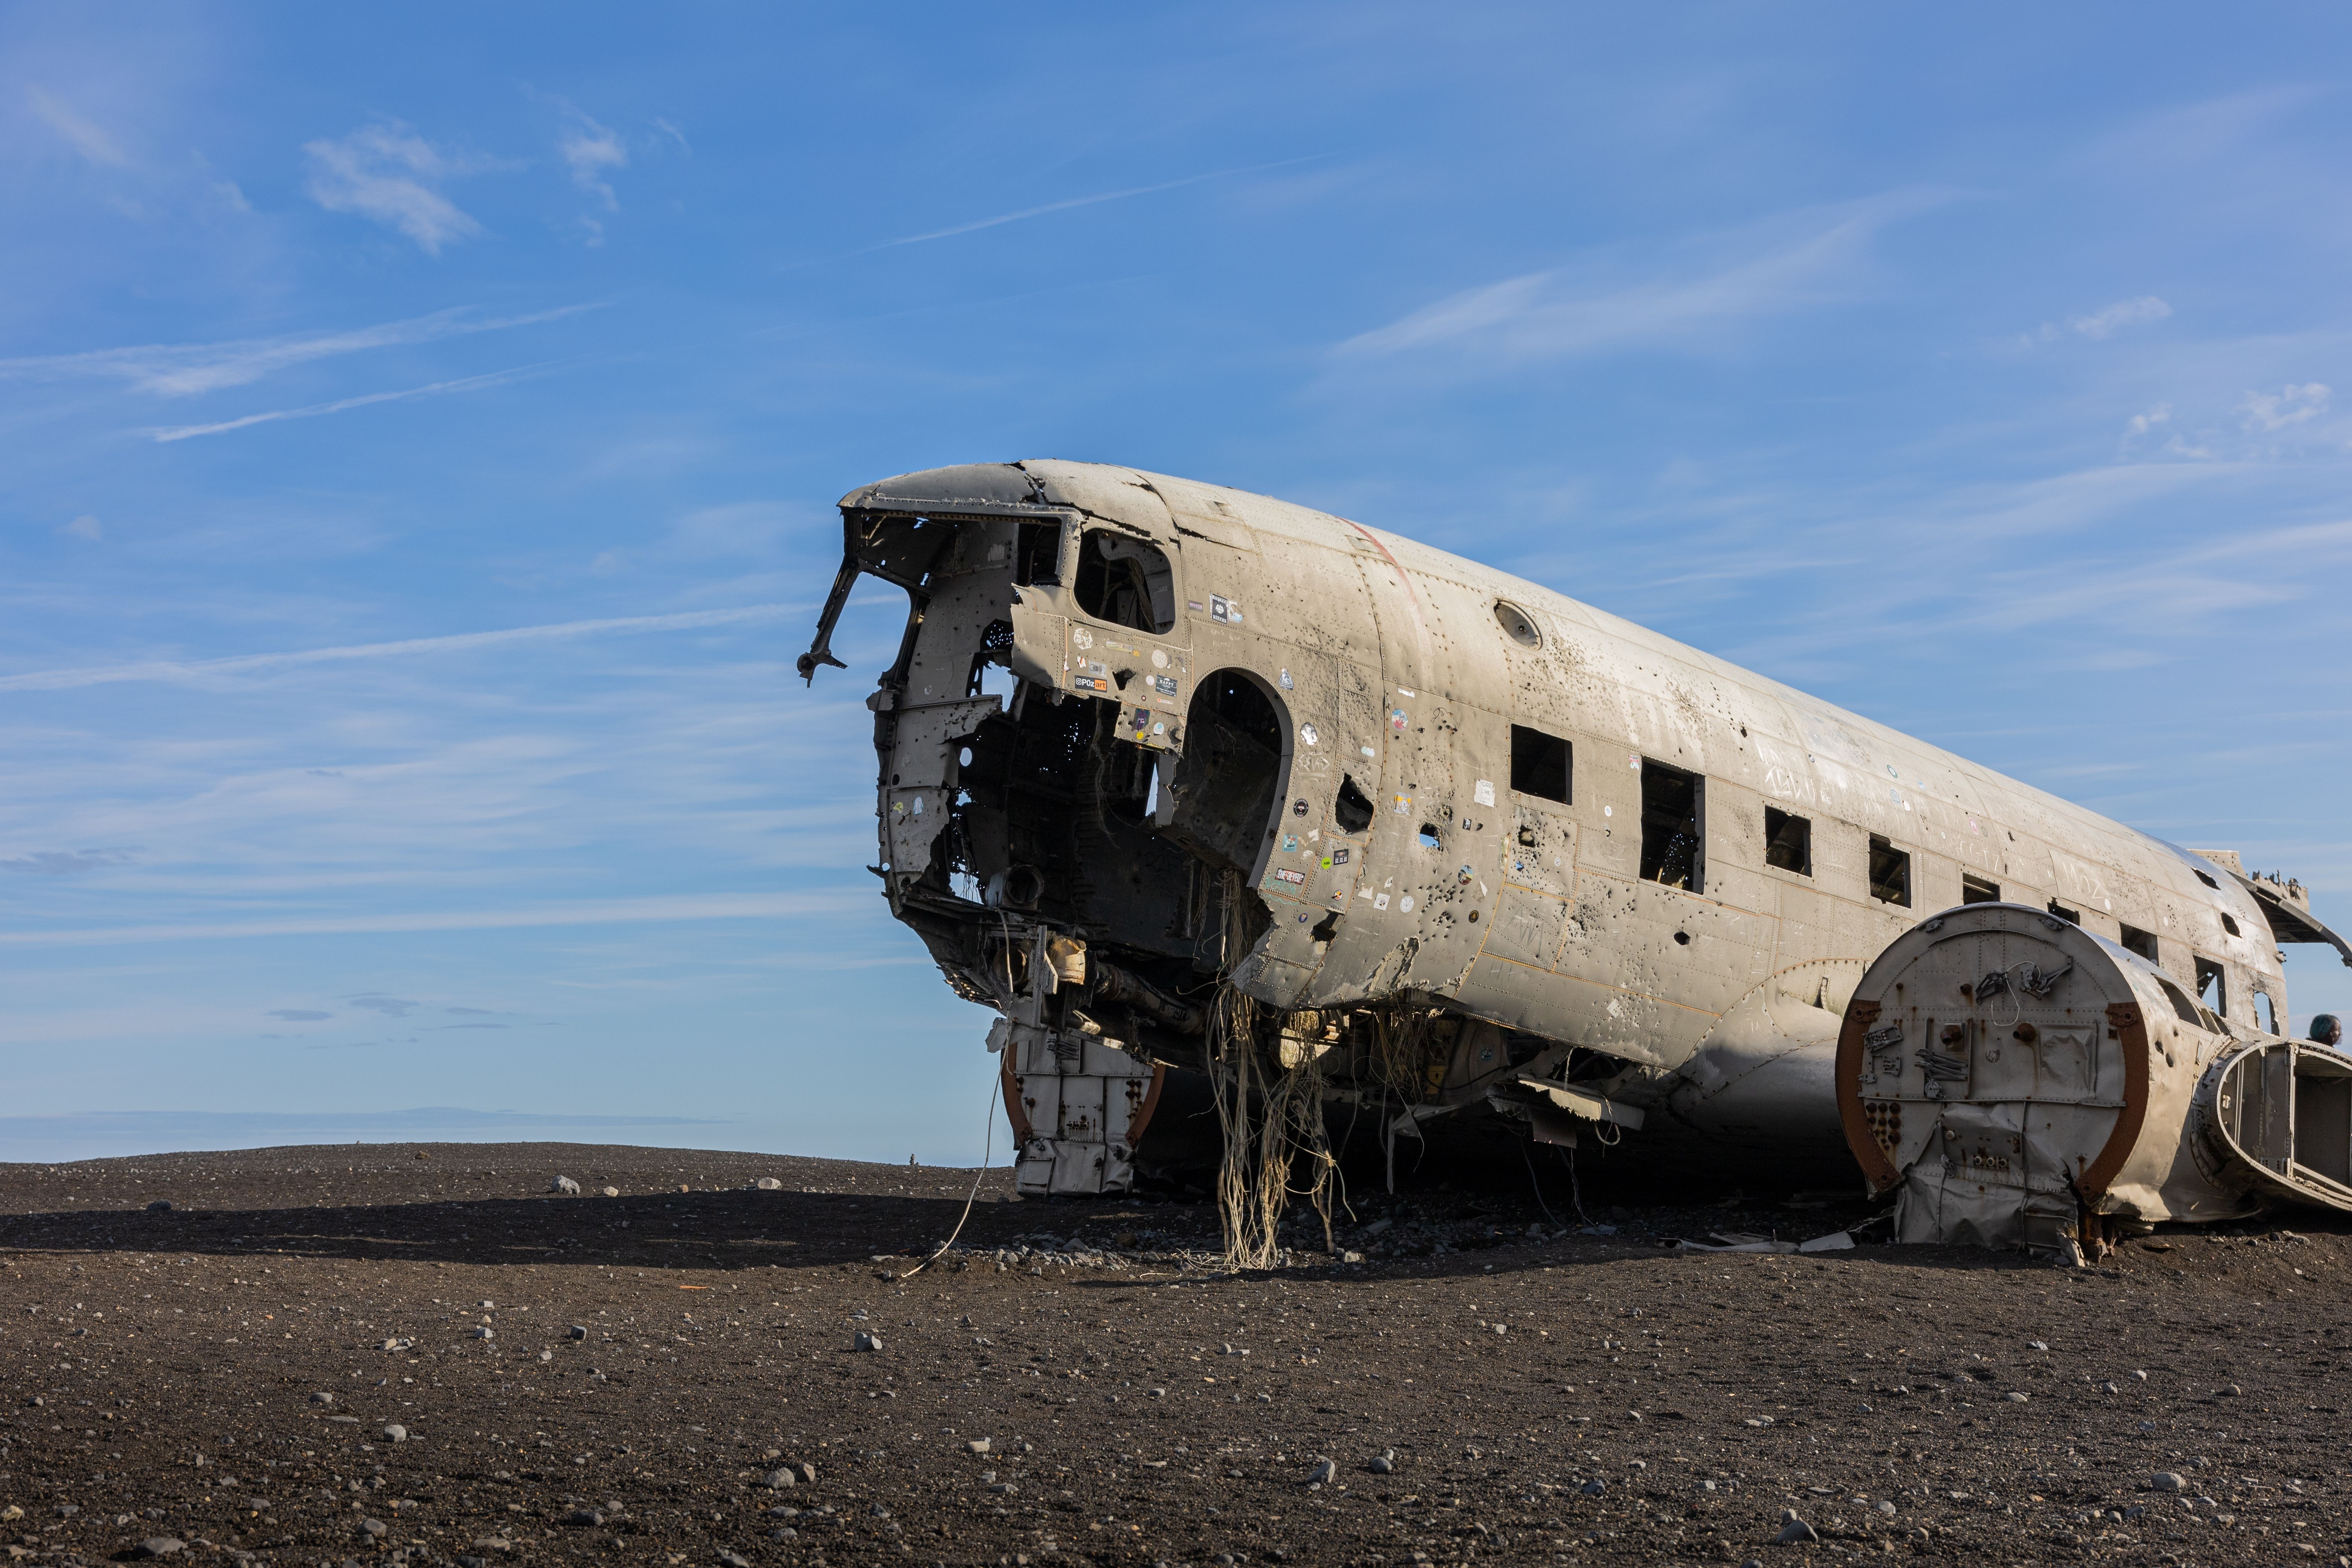 The wreckage of a Douglas DC-3 on an Icelandic beach.